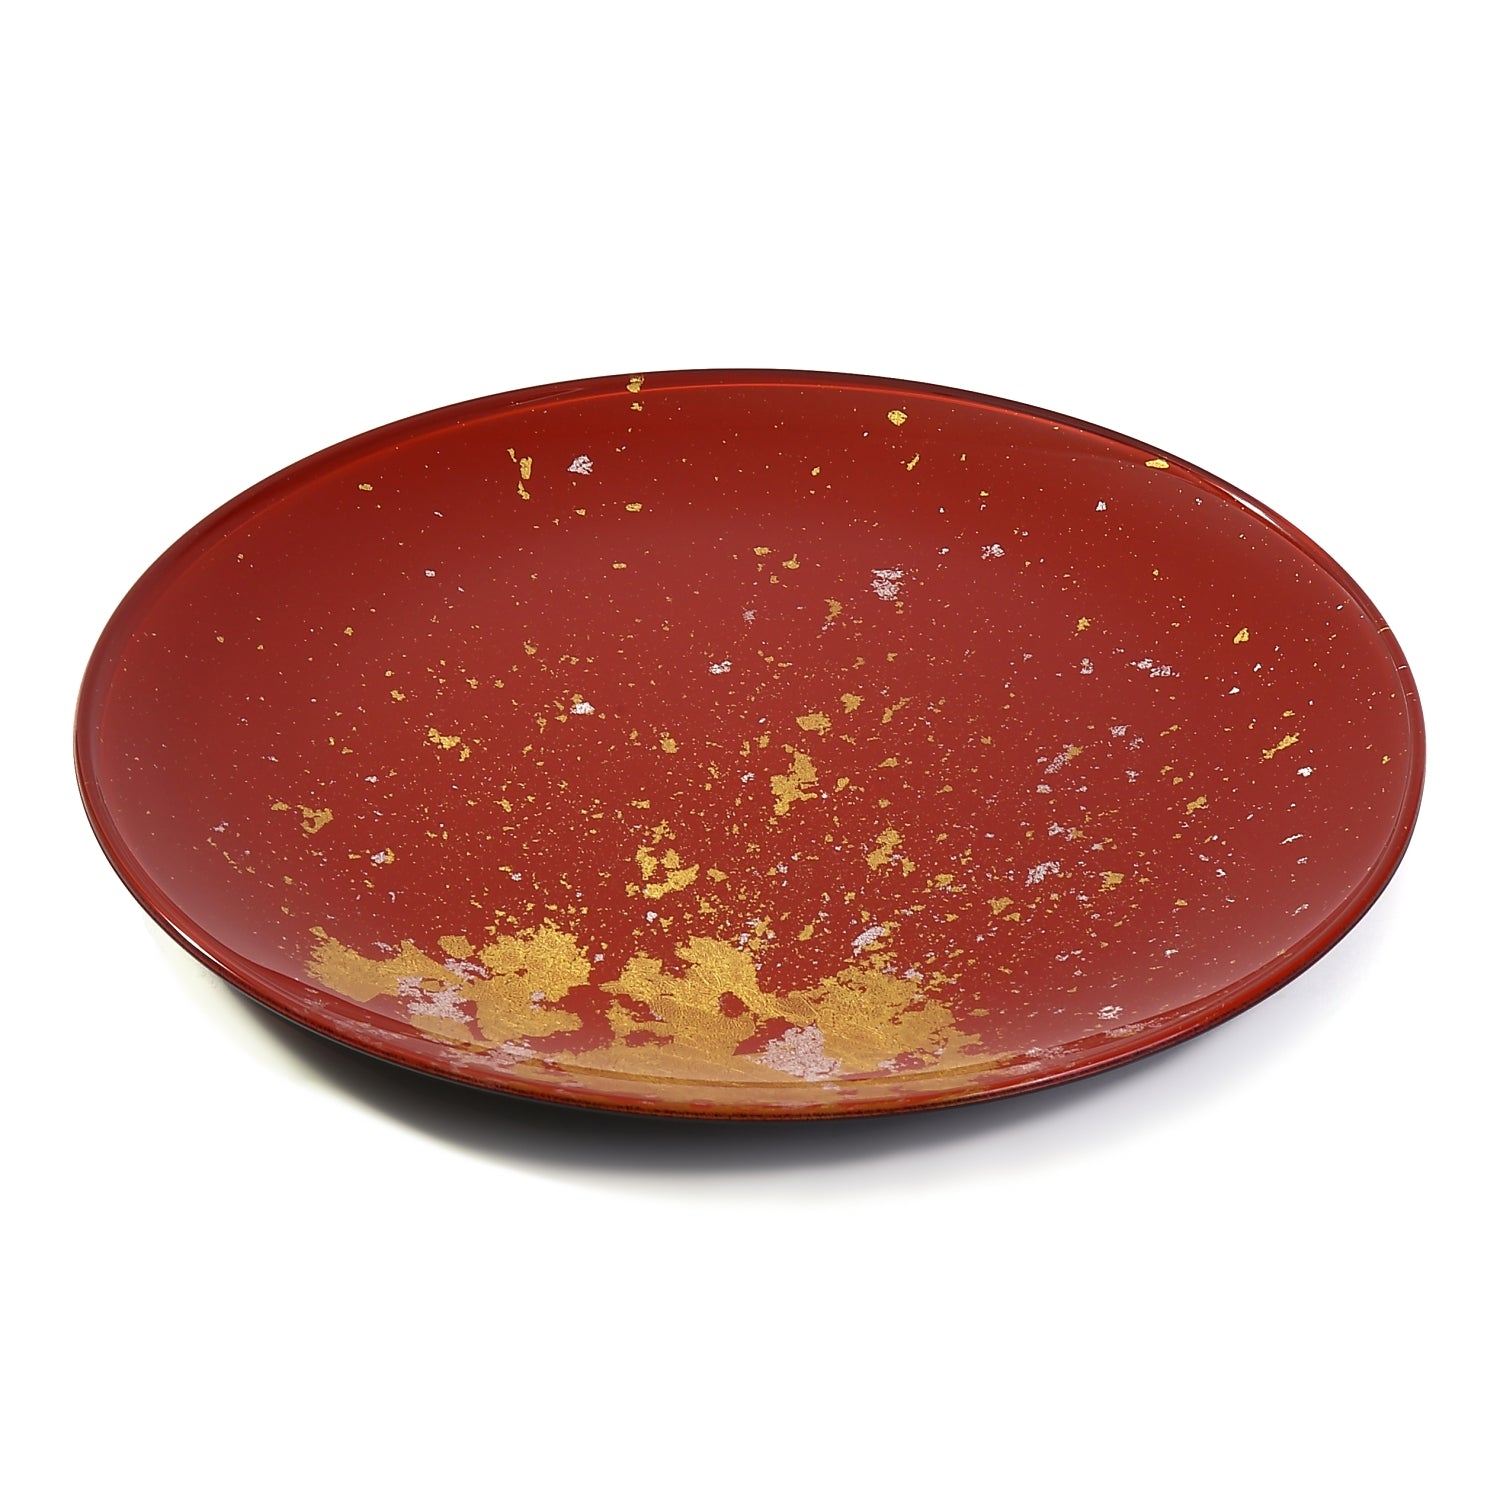 Syosaku Japanese Urushi Glass Flat Dinner Plate 11-inch (28cm) Vermilion with Gold Leaf, Dishwasher Safe - Syosaku-Japan